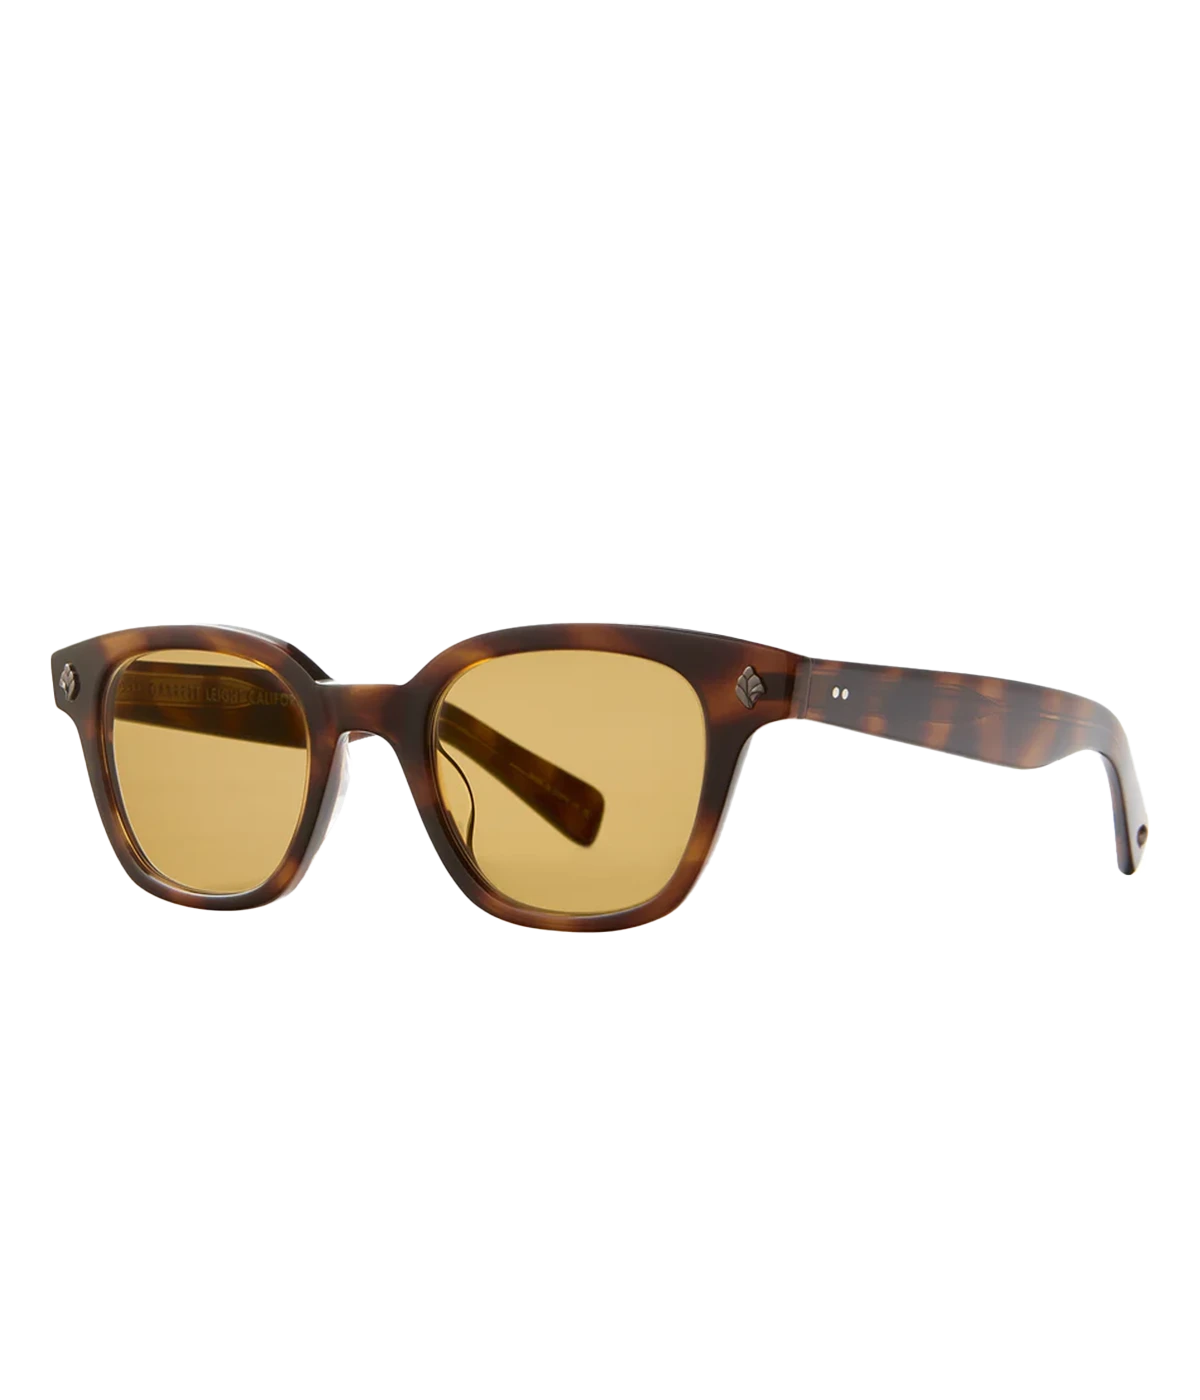 Naples Sun 46 Sunglasses in Tortoise & Pure Maple